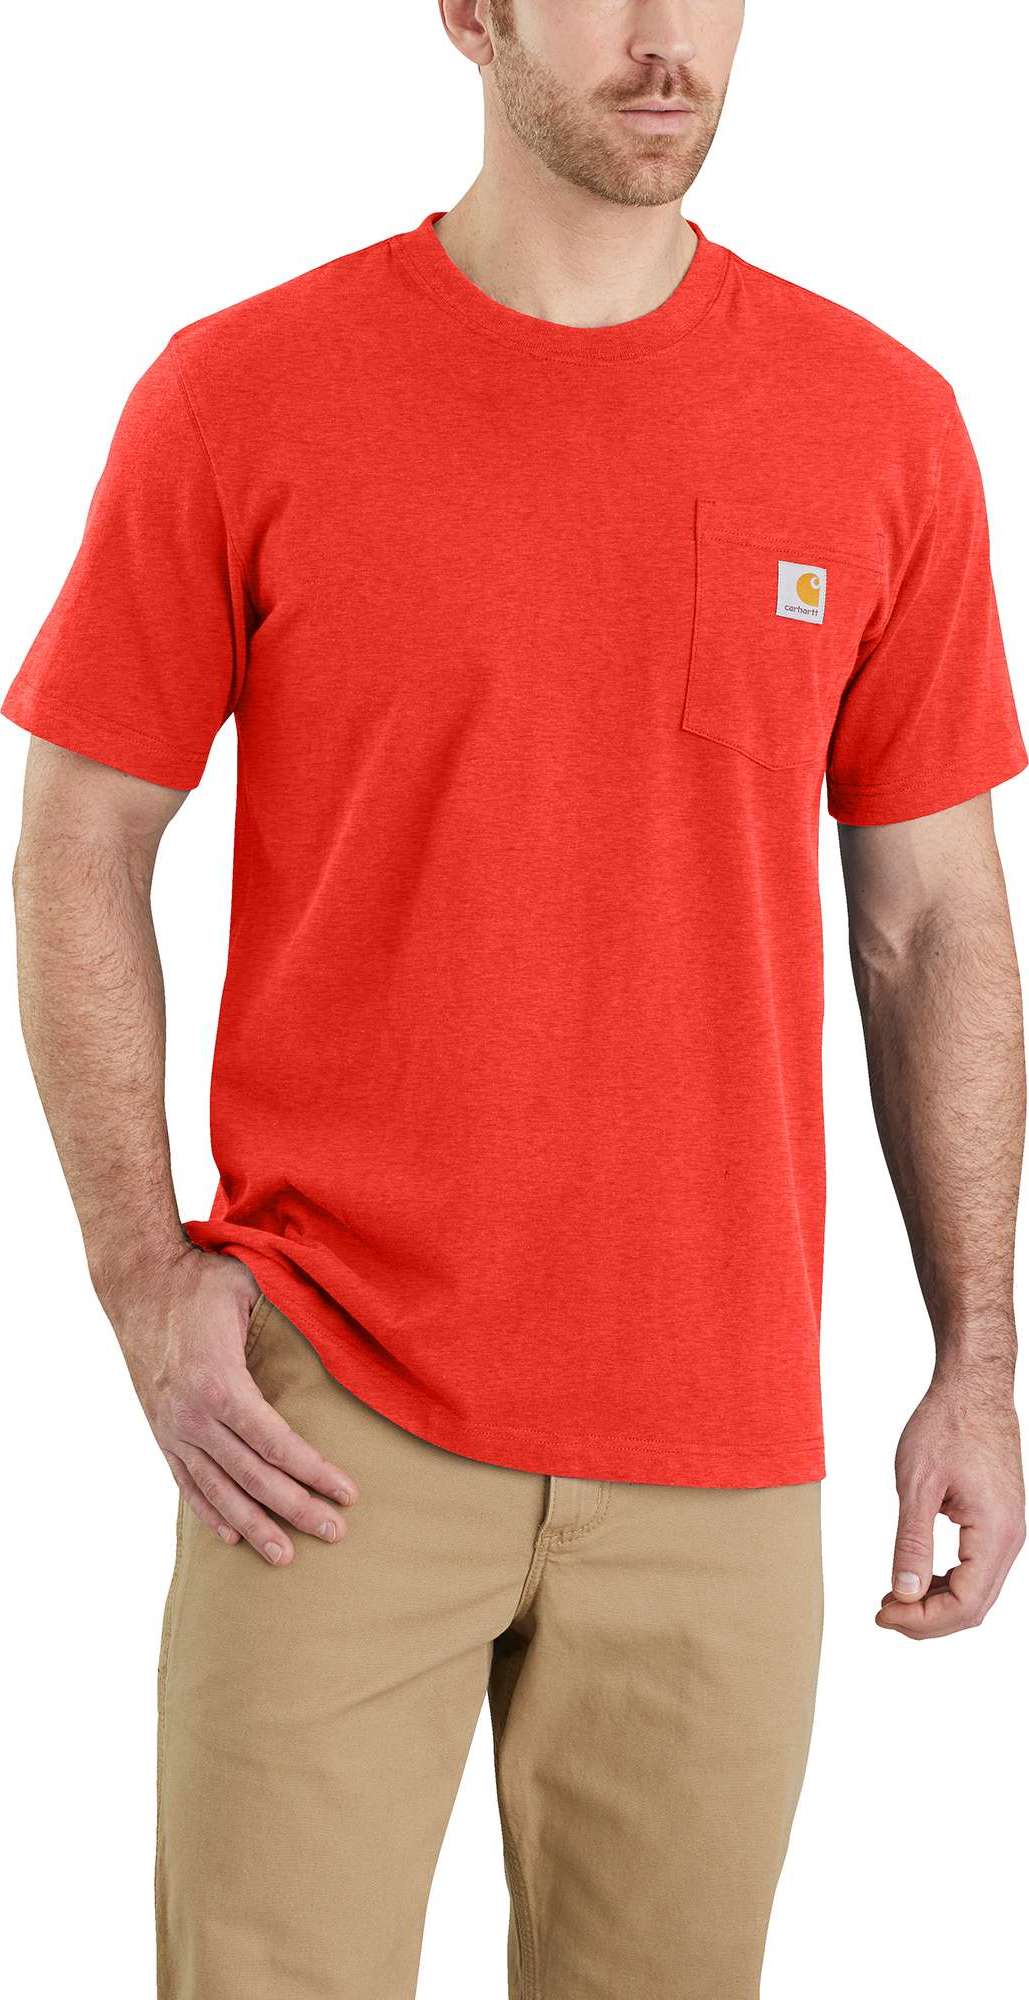 Men’s Workwear Pocket S/S T-Shirt CURRANT HEATHER